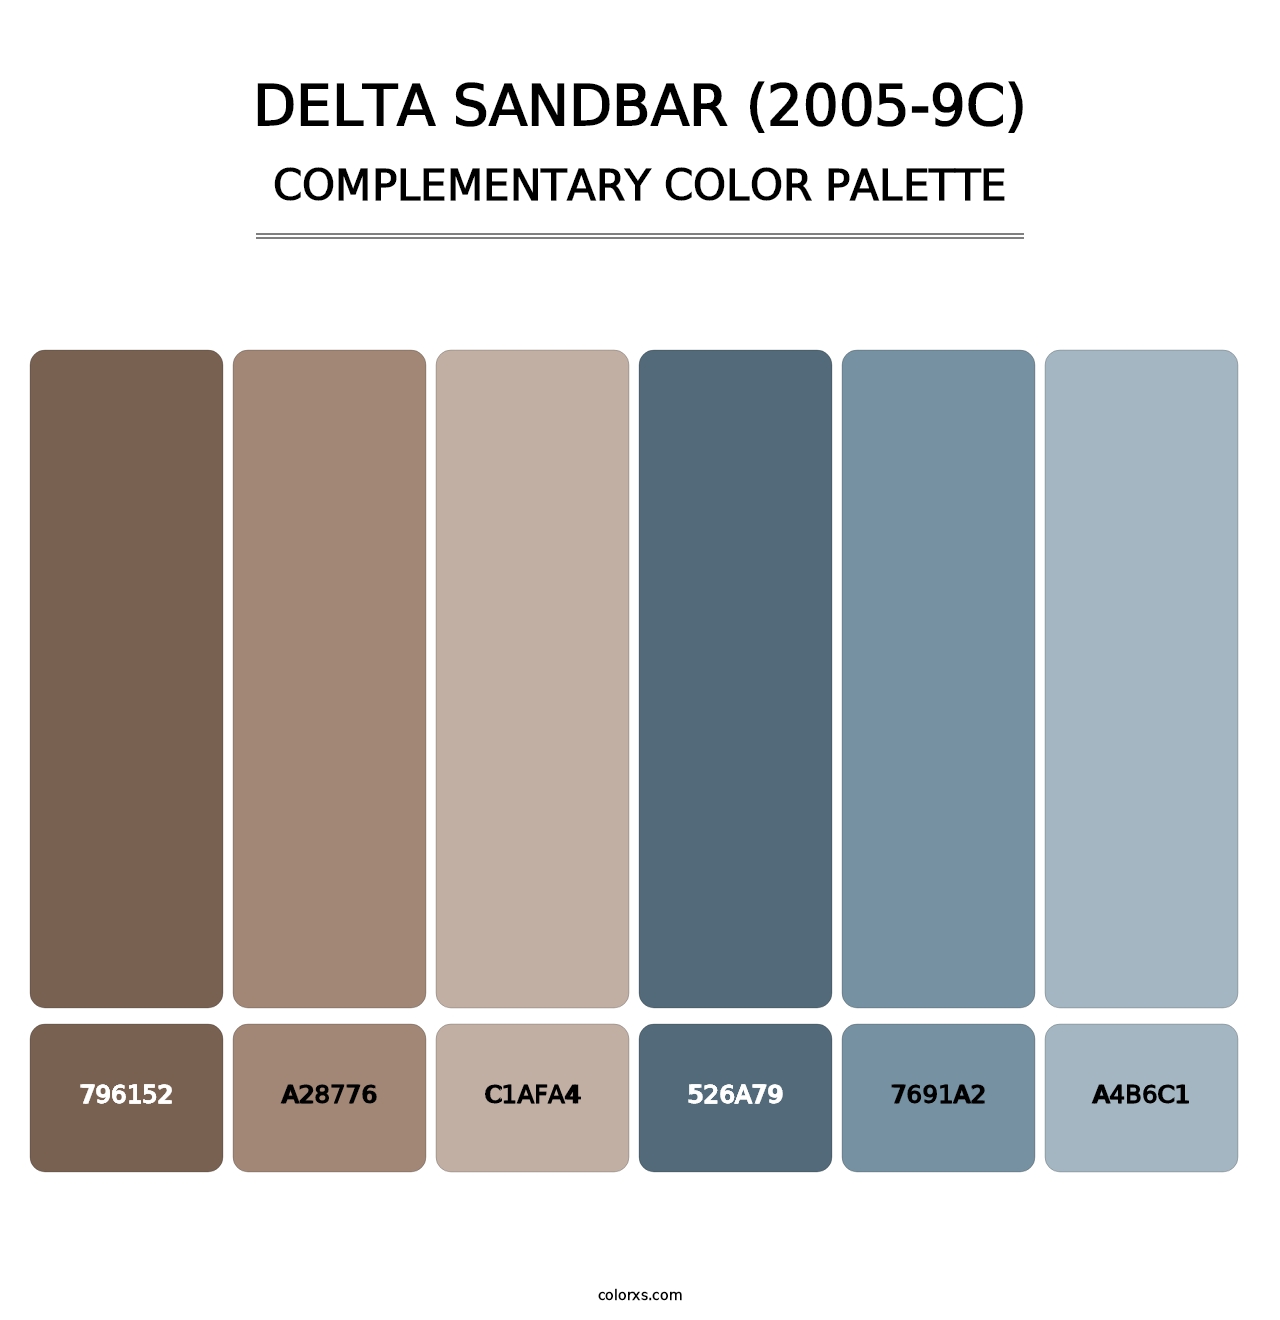 Delta Sandbar (2005-9C) - Complementary Color Palette